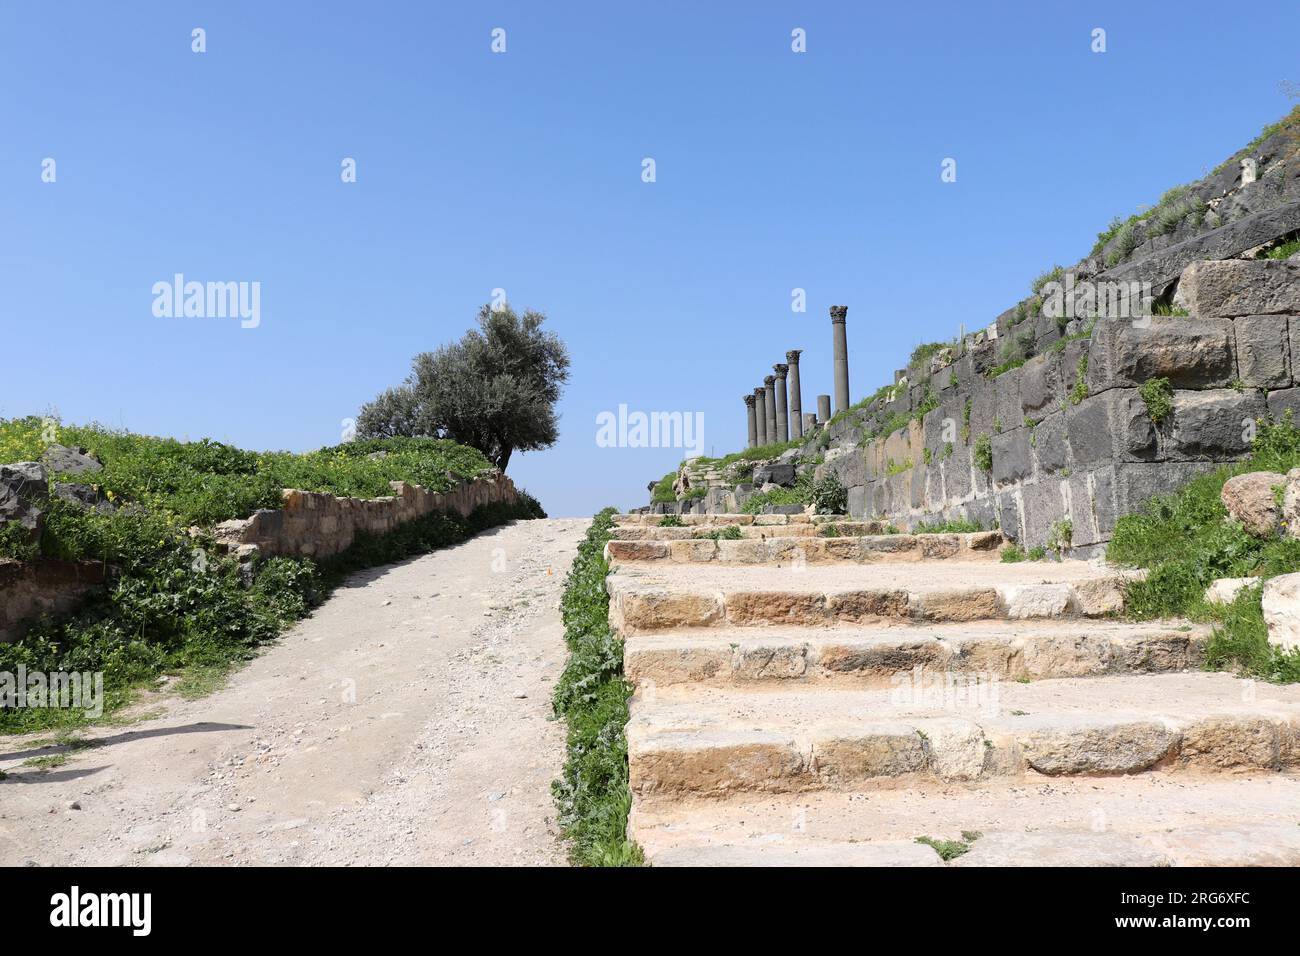 Travel to Arab Muslims city - Umm Qais, Irbid, Jordan (ancient Roman and Greek history in east) Stock Photo